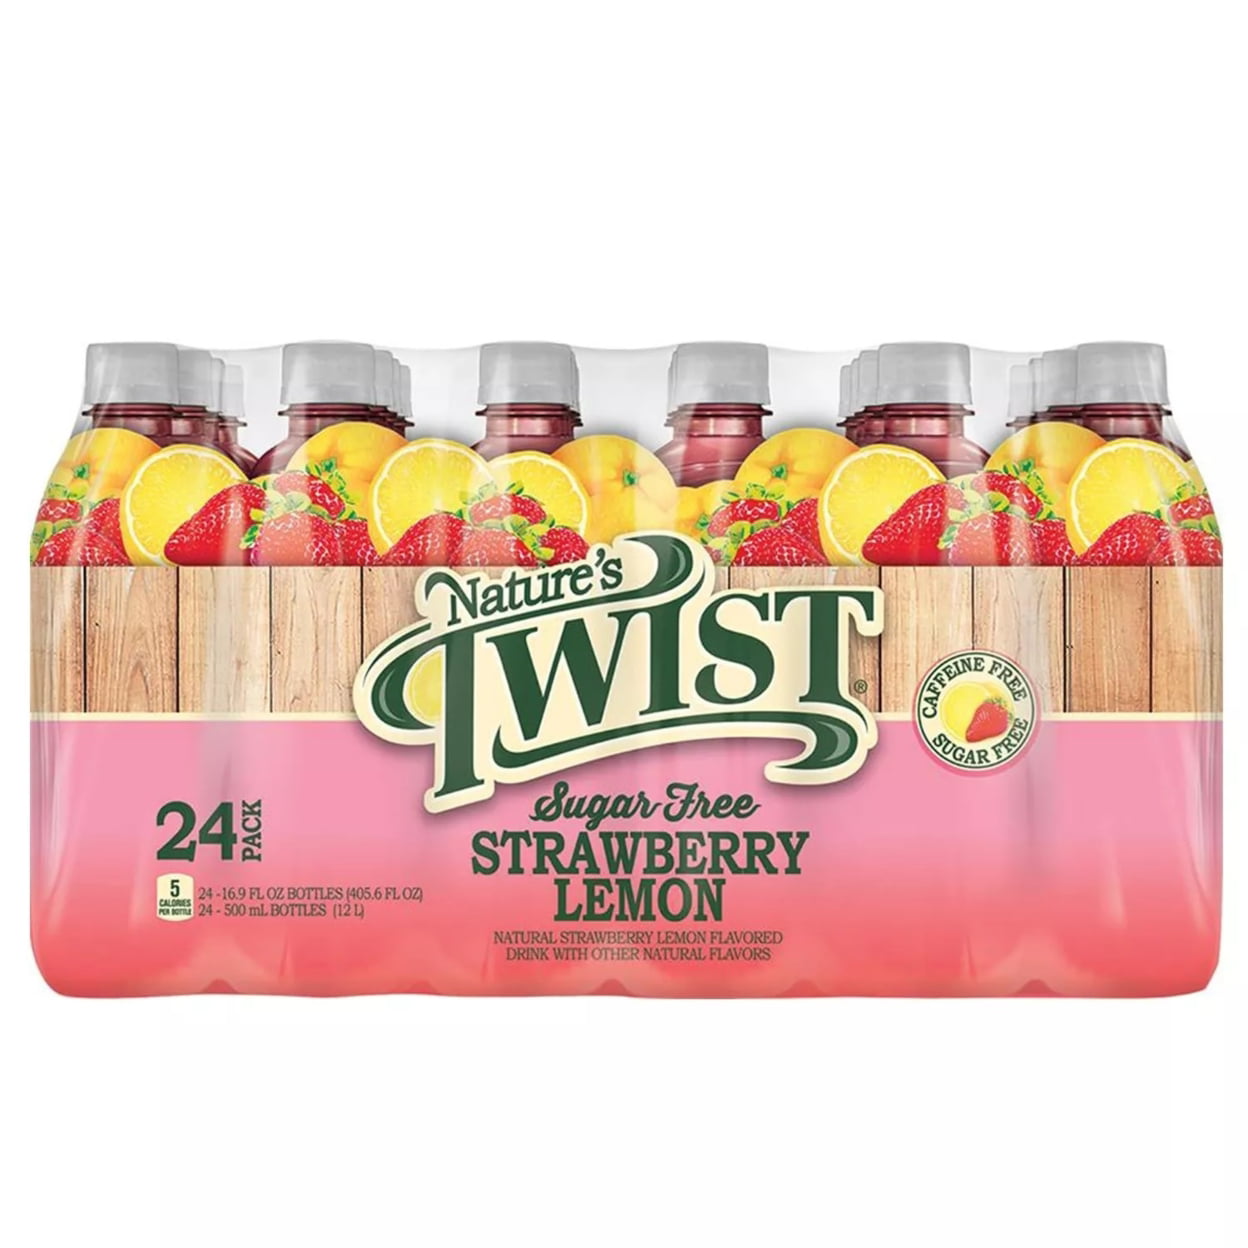 Sam's Club Members: 24-Pack 16.9-Oz Nature's Twist Sugar-Free Strawberry Lemon Drink $9 + Free Curbside Pickup for Plus Members